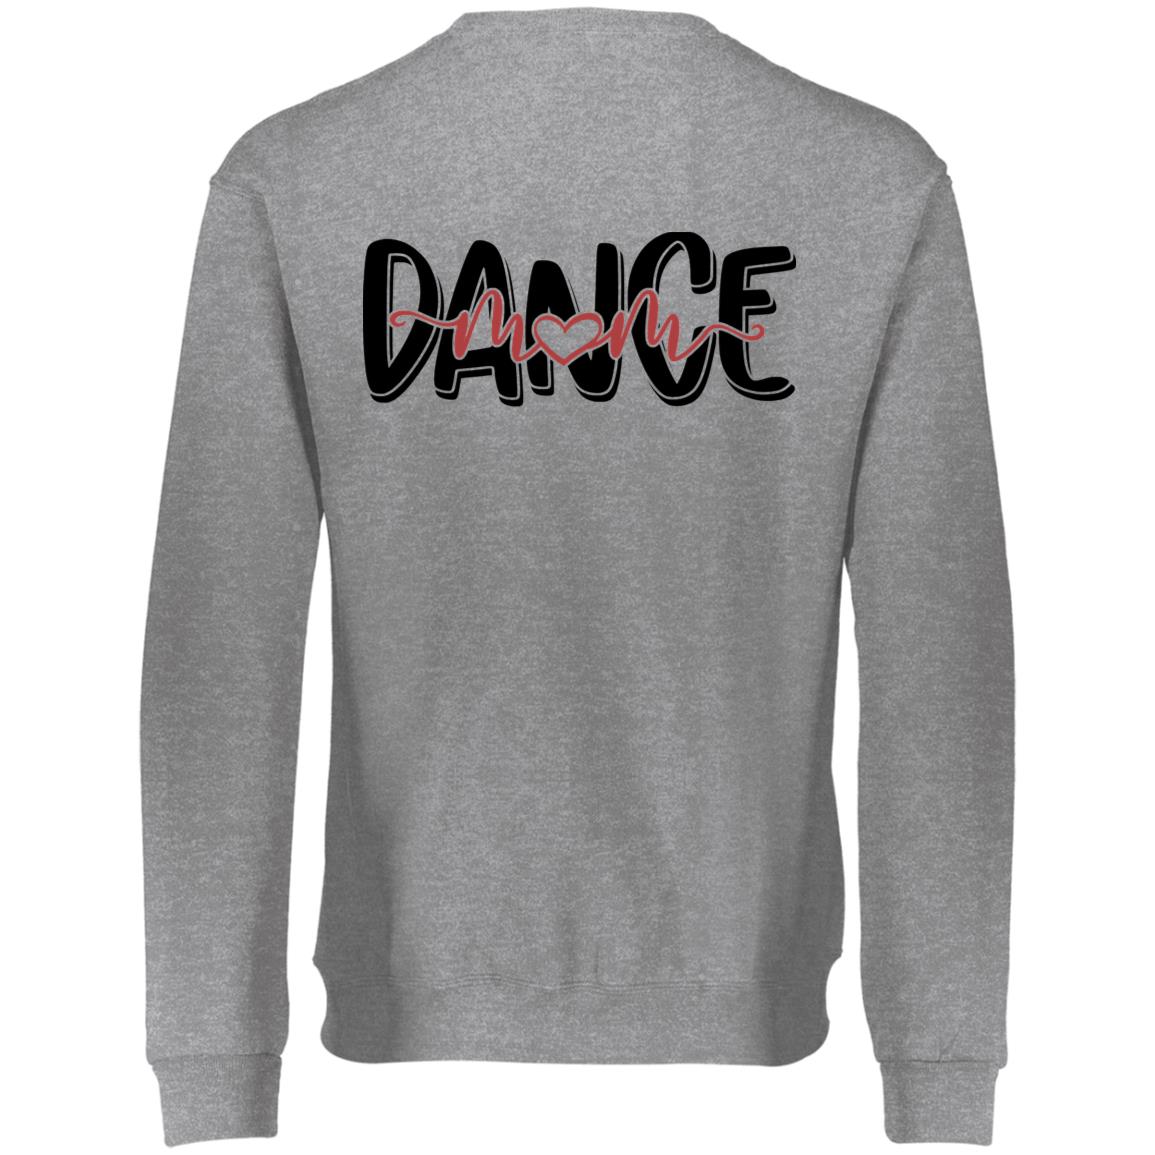 Spins Dance Mom Dri-Power Fleece Crewneck Sweatshirt